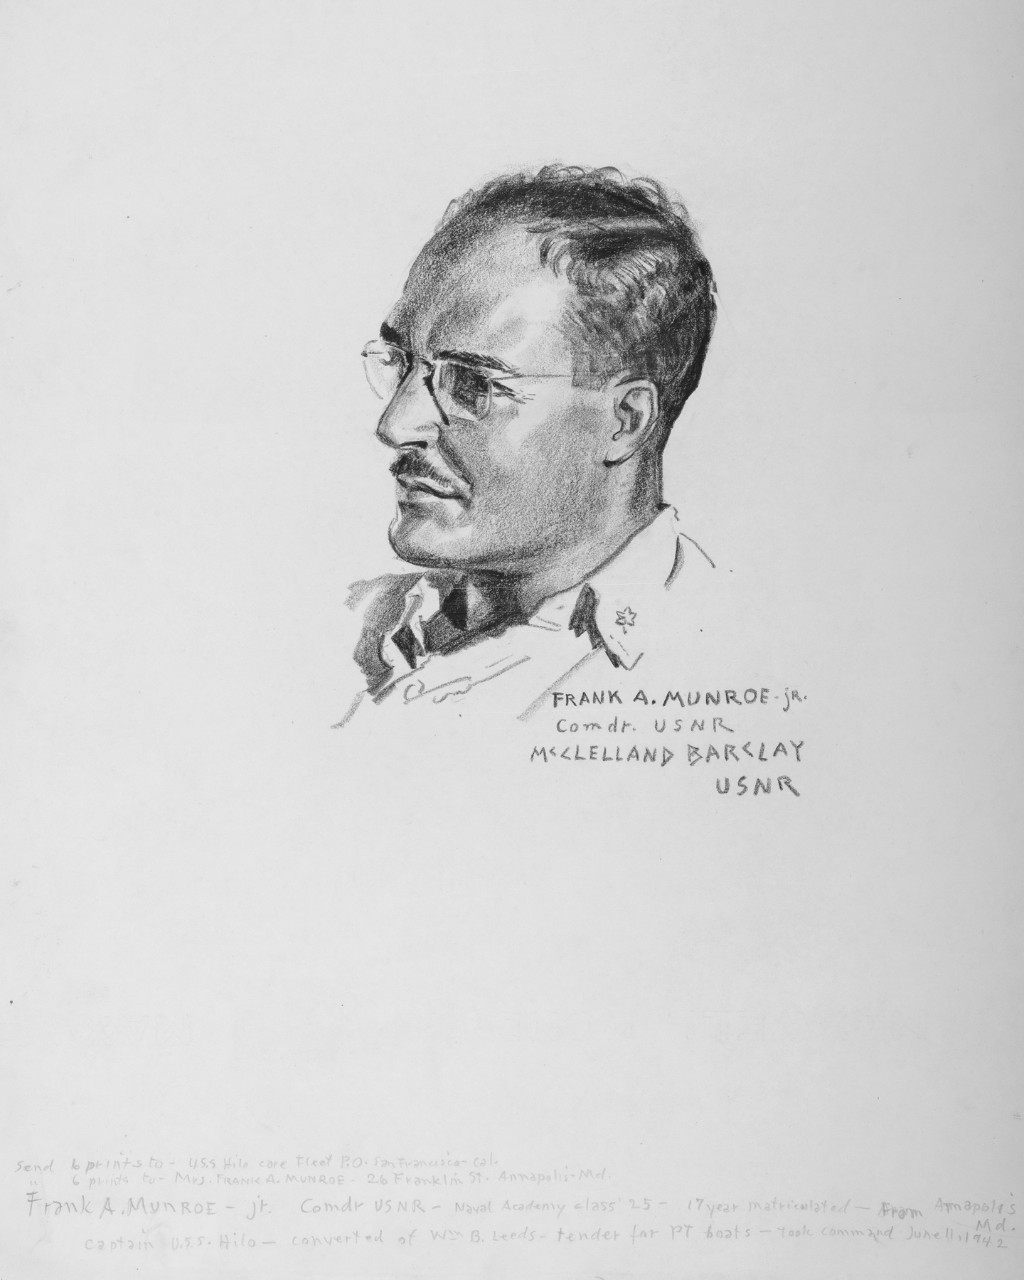 Portrait of CDR Frank A. Munroe, Jr.